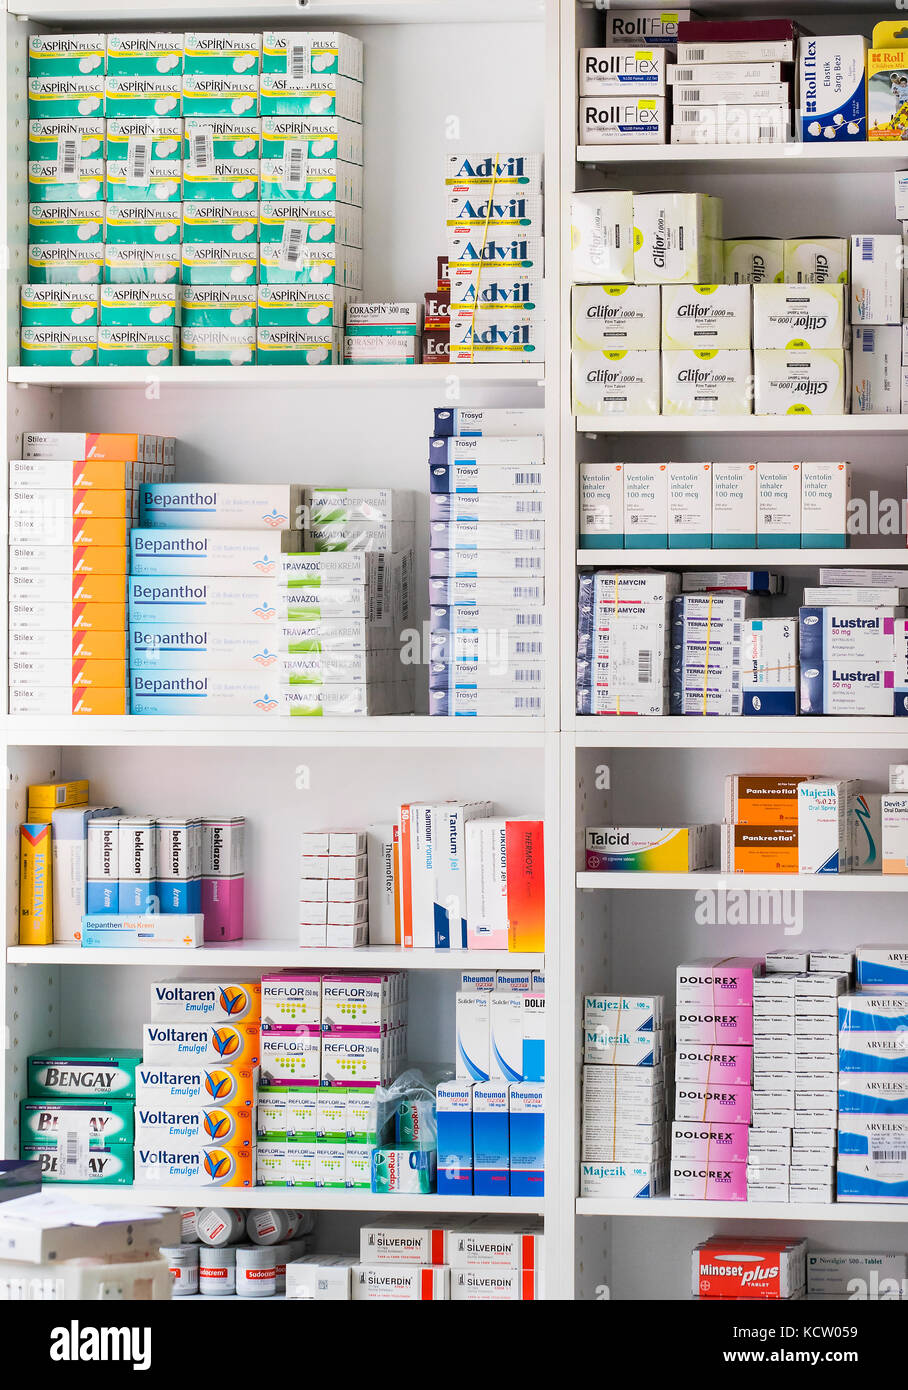 Marmaris Turkey 1 May 2017 Pharmacy Cabinets With Medicines